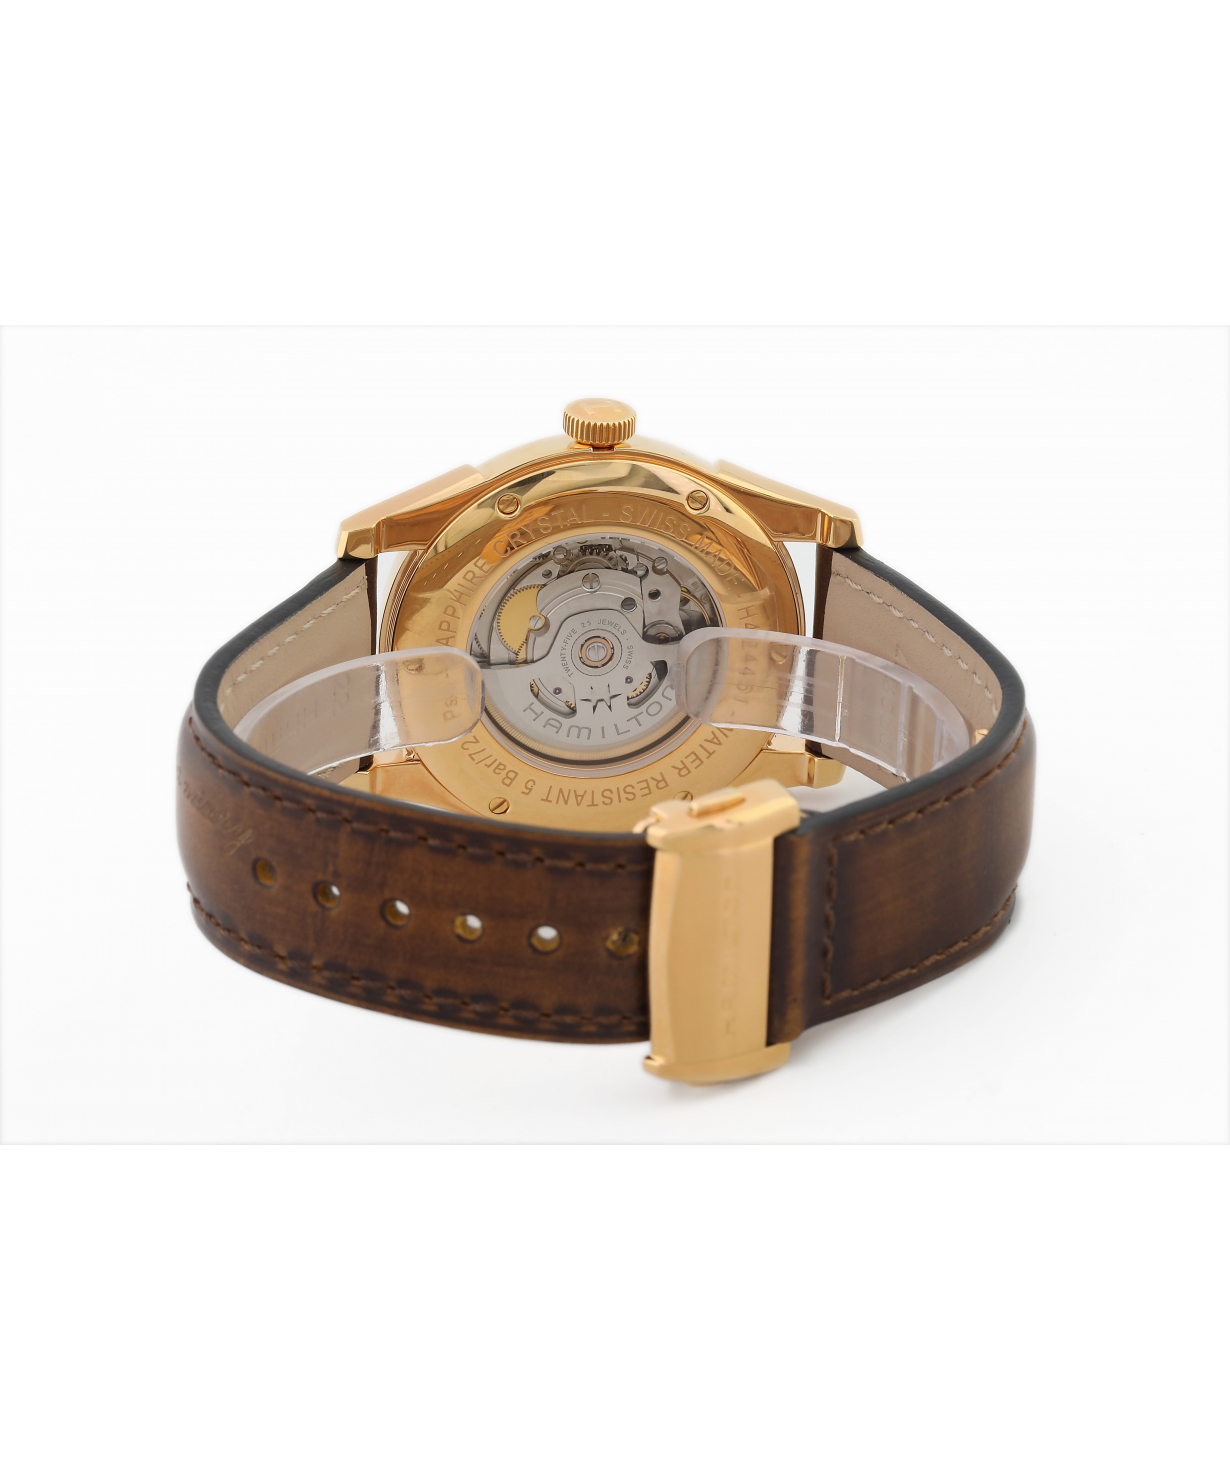 Wristwatch `Hamilton` H42445551